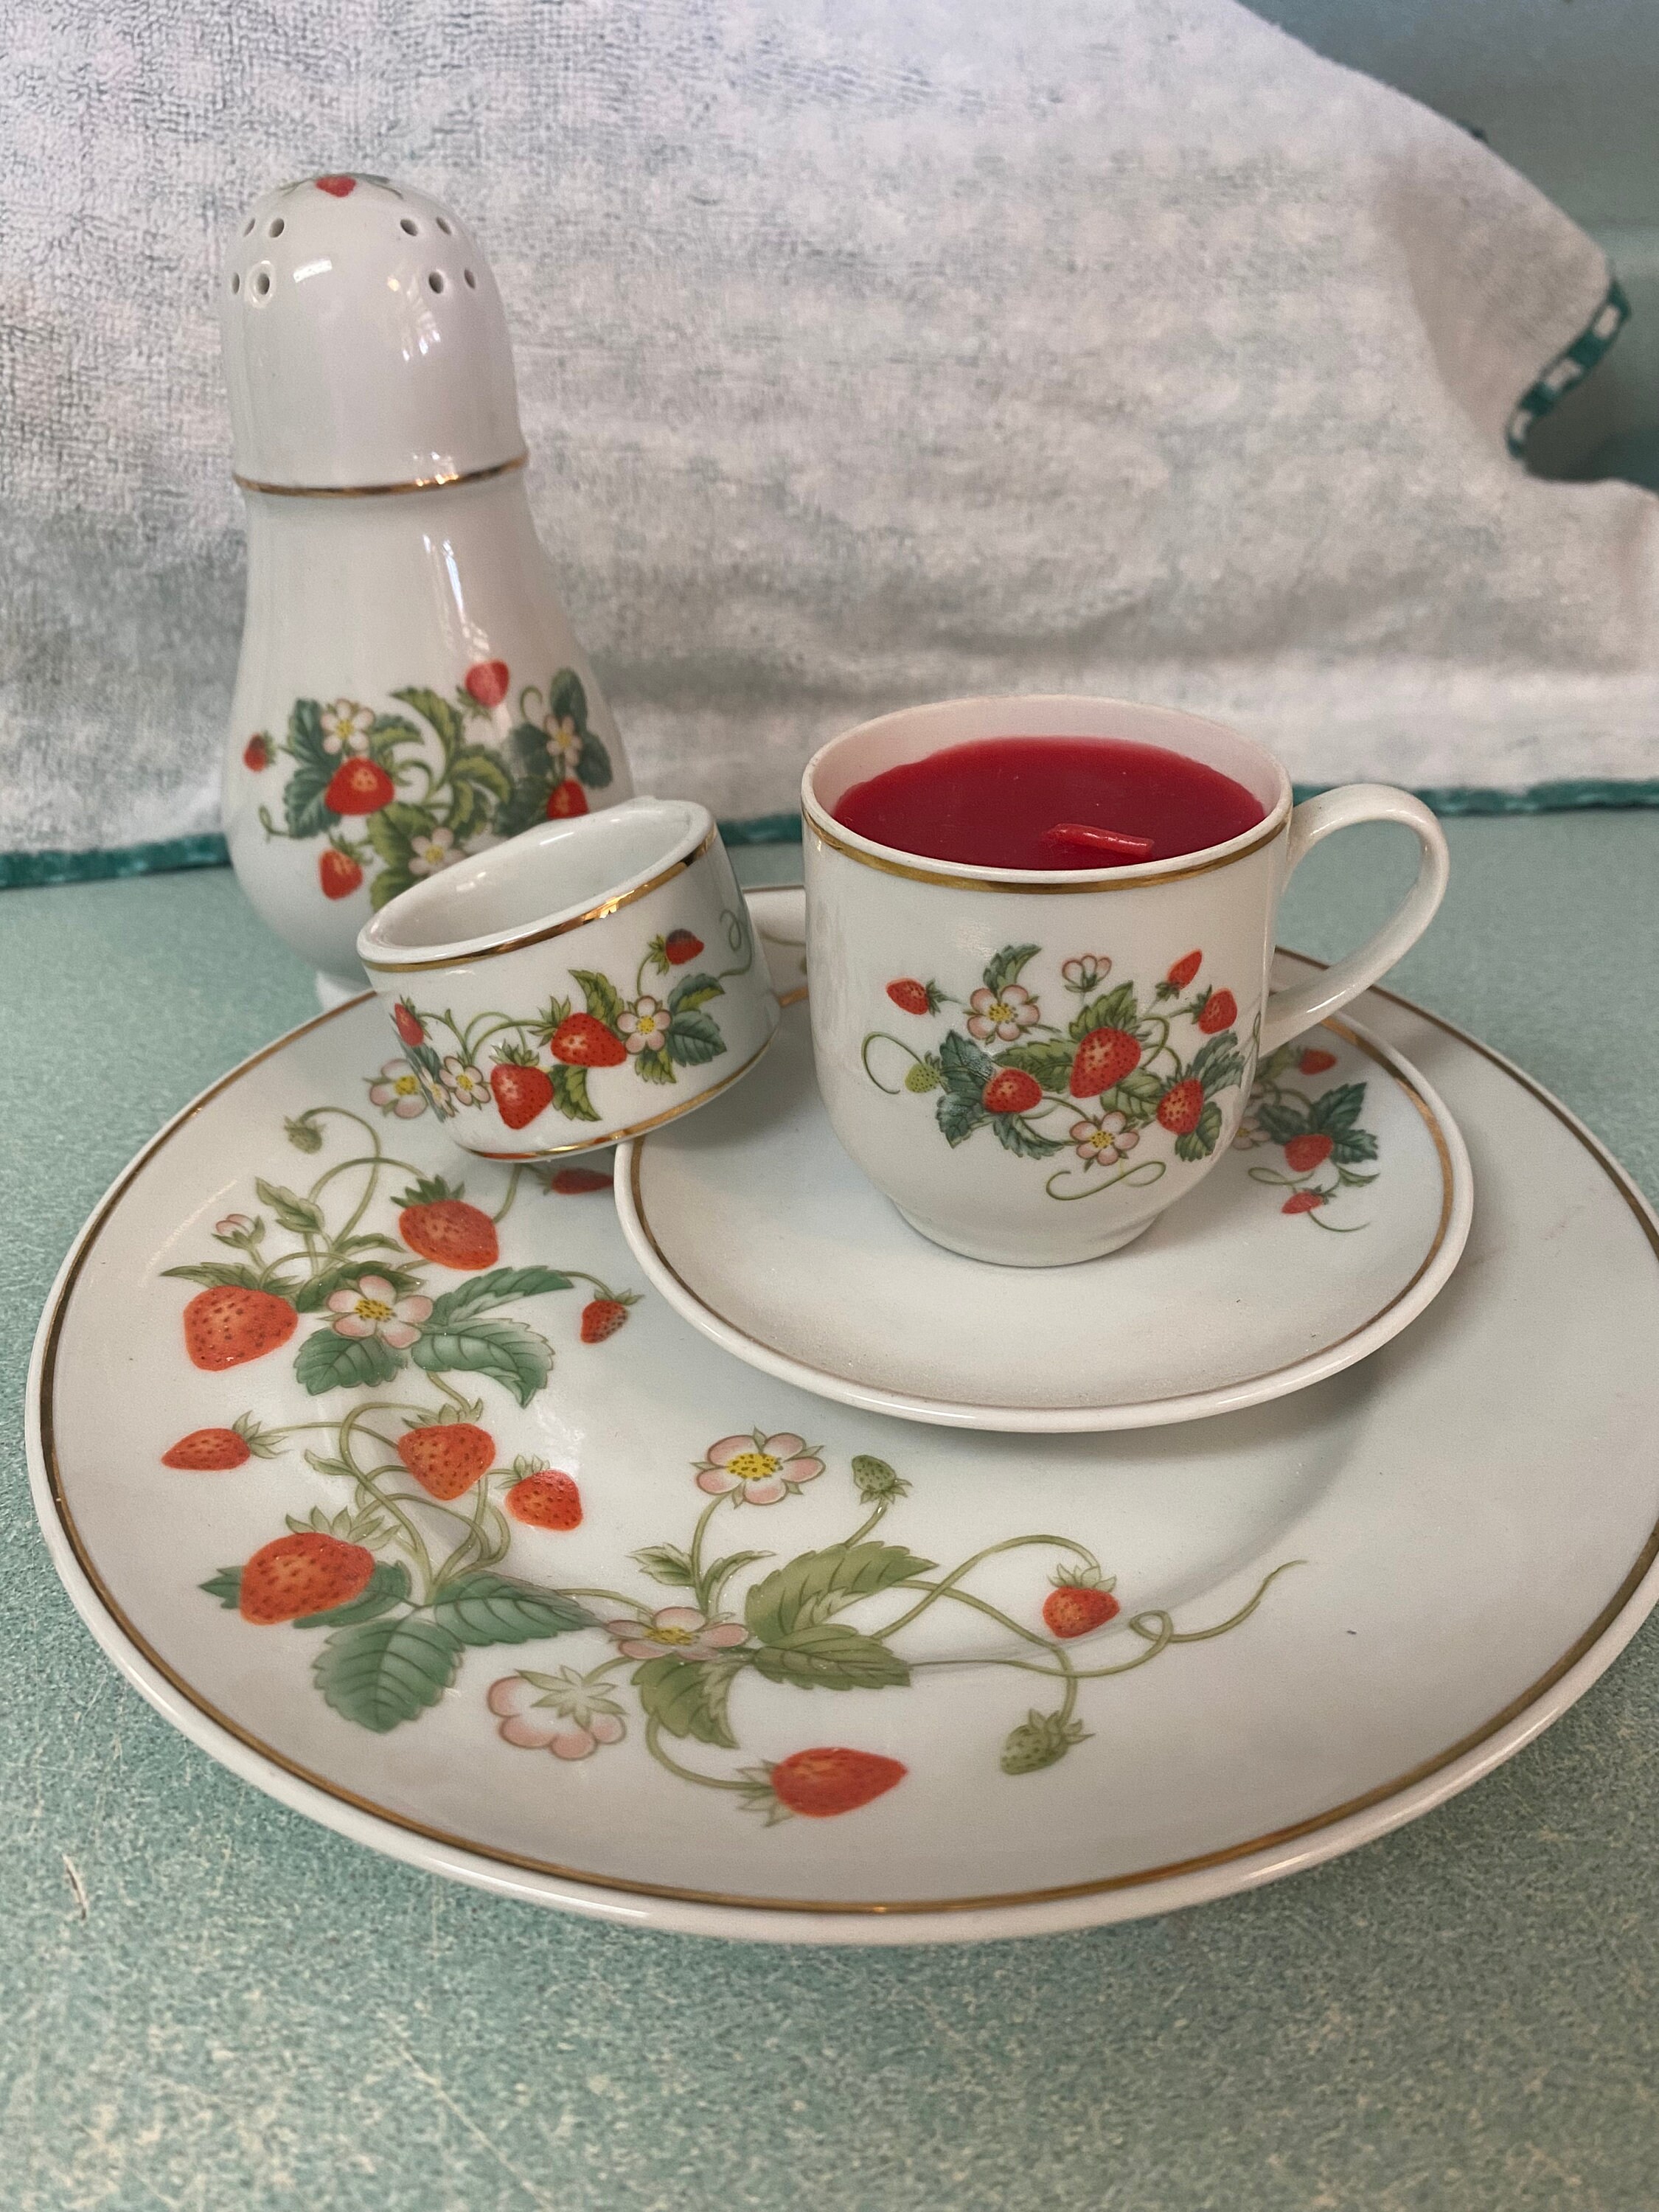 Miniature Teapot By Avon, Blue Seasons Harvest, Ceramic Tea Pot